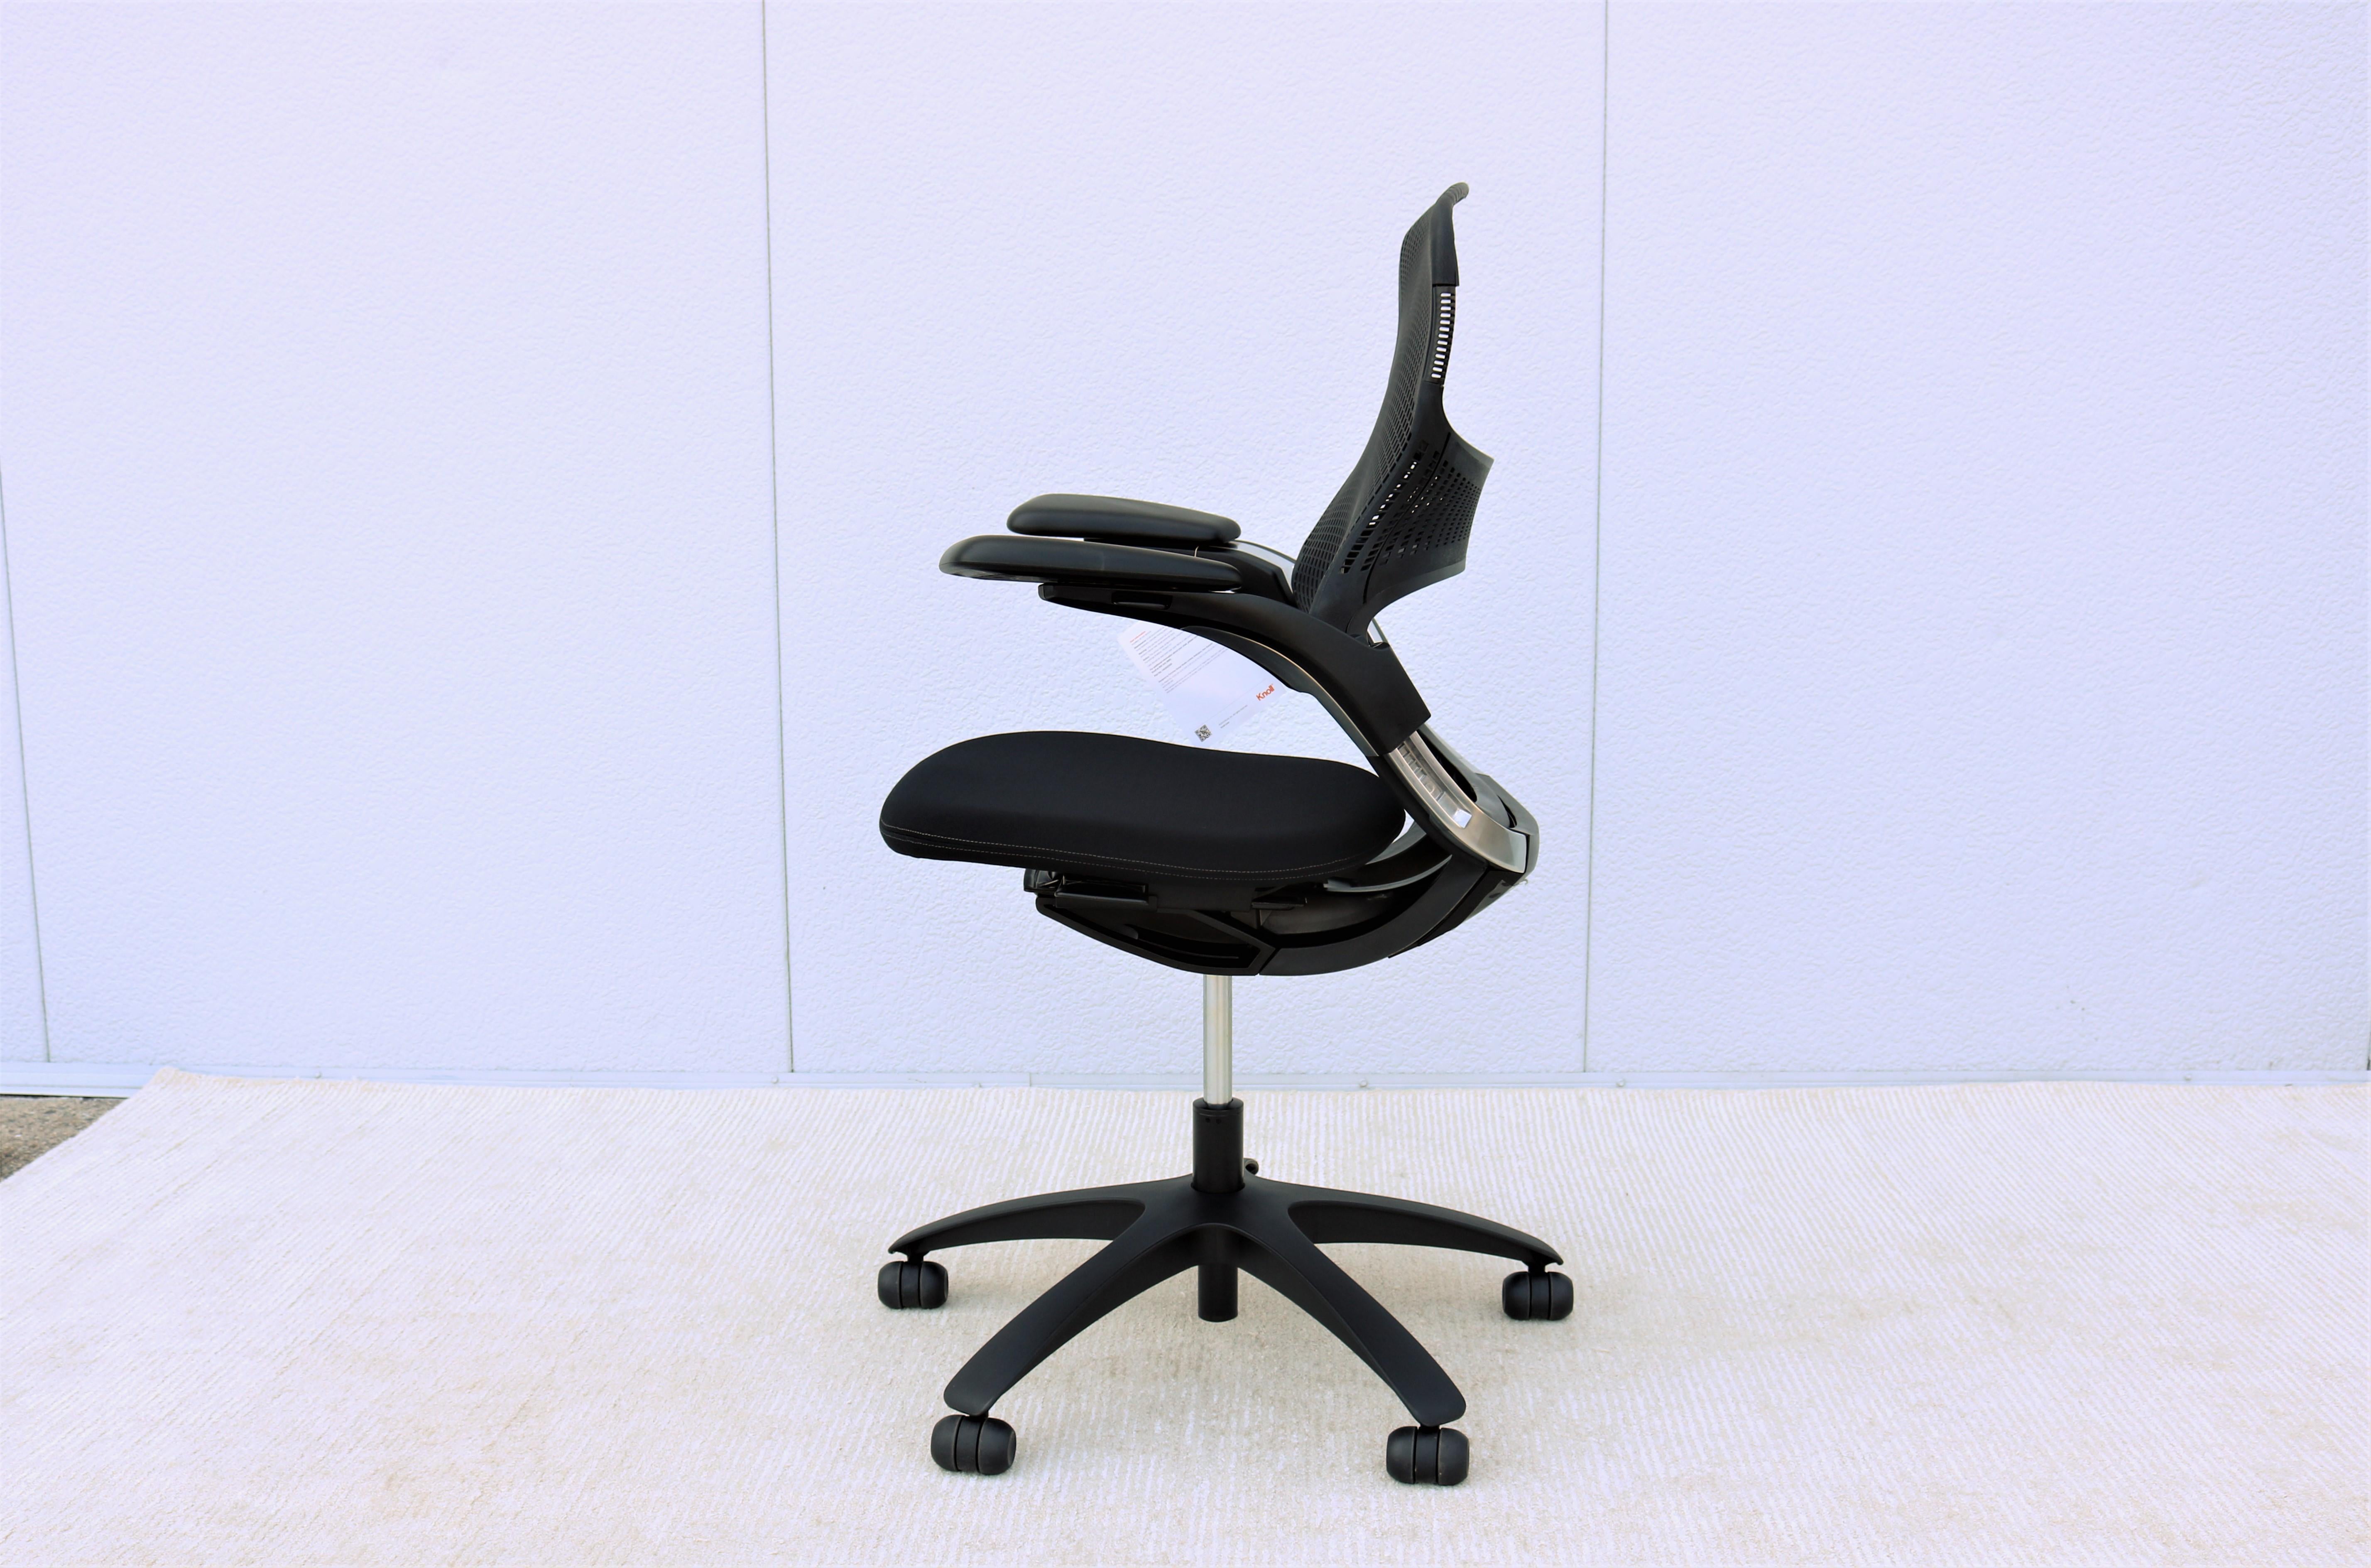 Steel Knoll Generation Black Ergonomic Office Desk Chair Fully Adjustable, Brand New For Sale